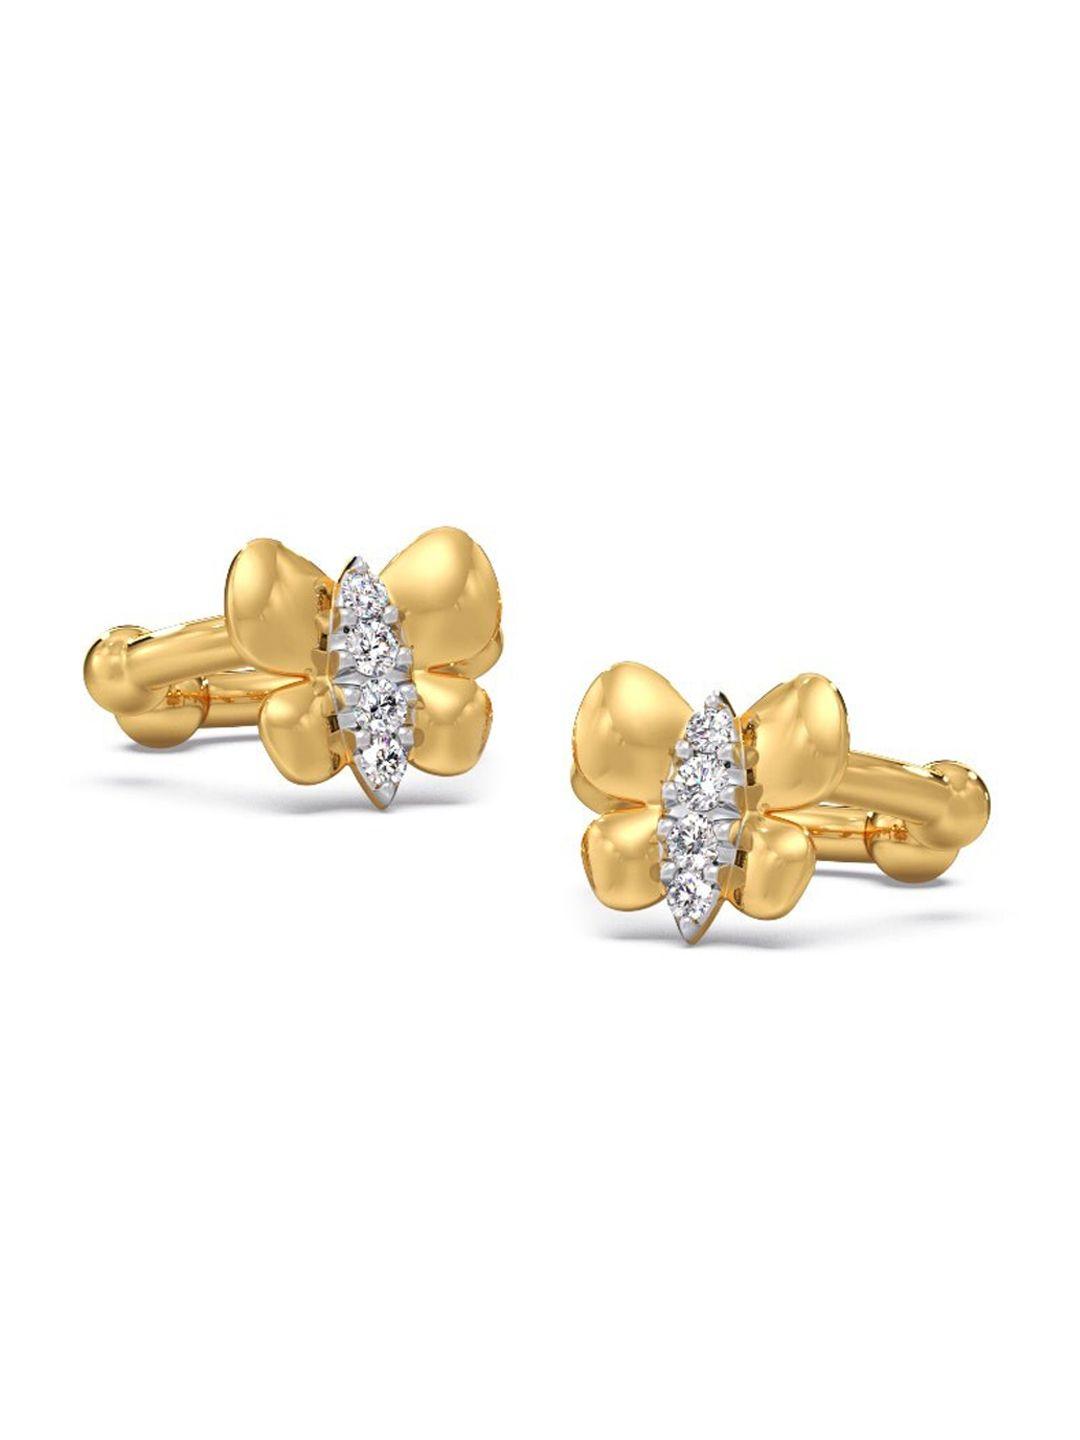 candere a kalyan jewellers company 18kt bis hallmark gold diamond-studded earrings-0.5gm